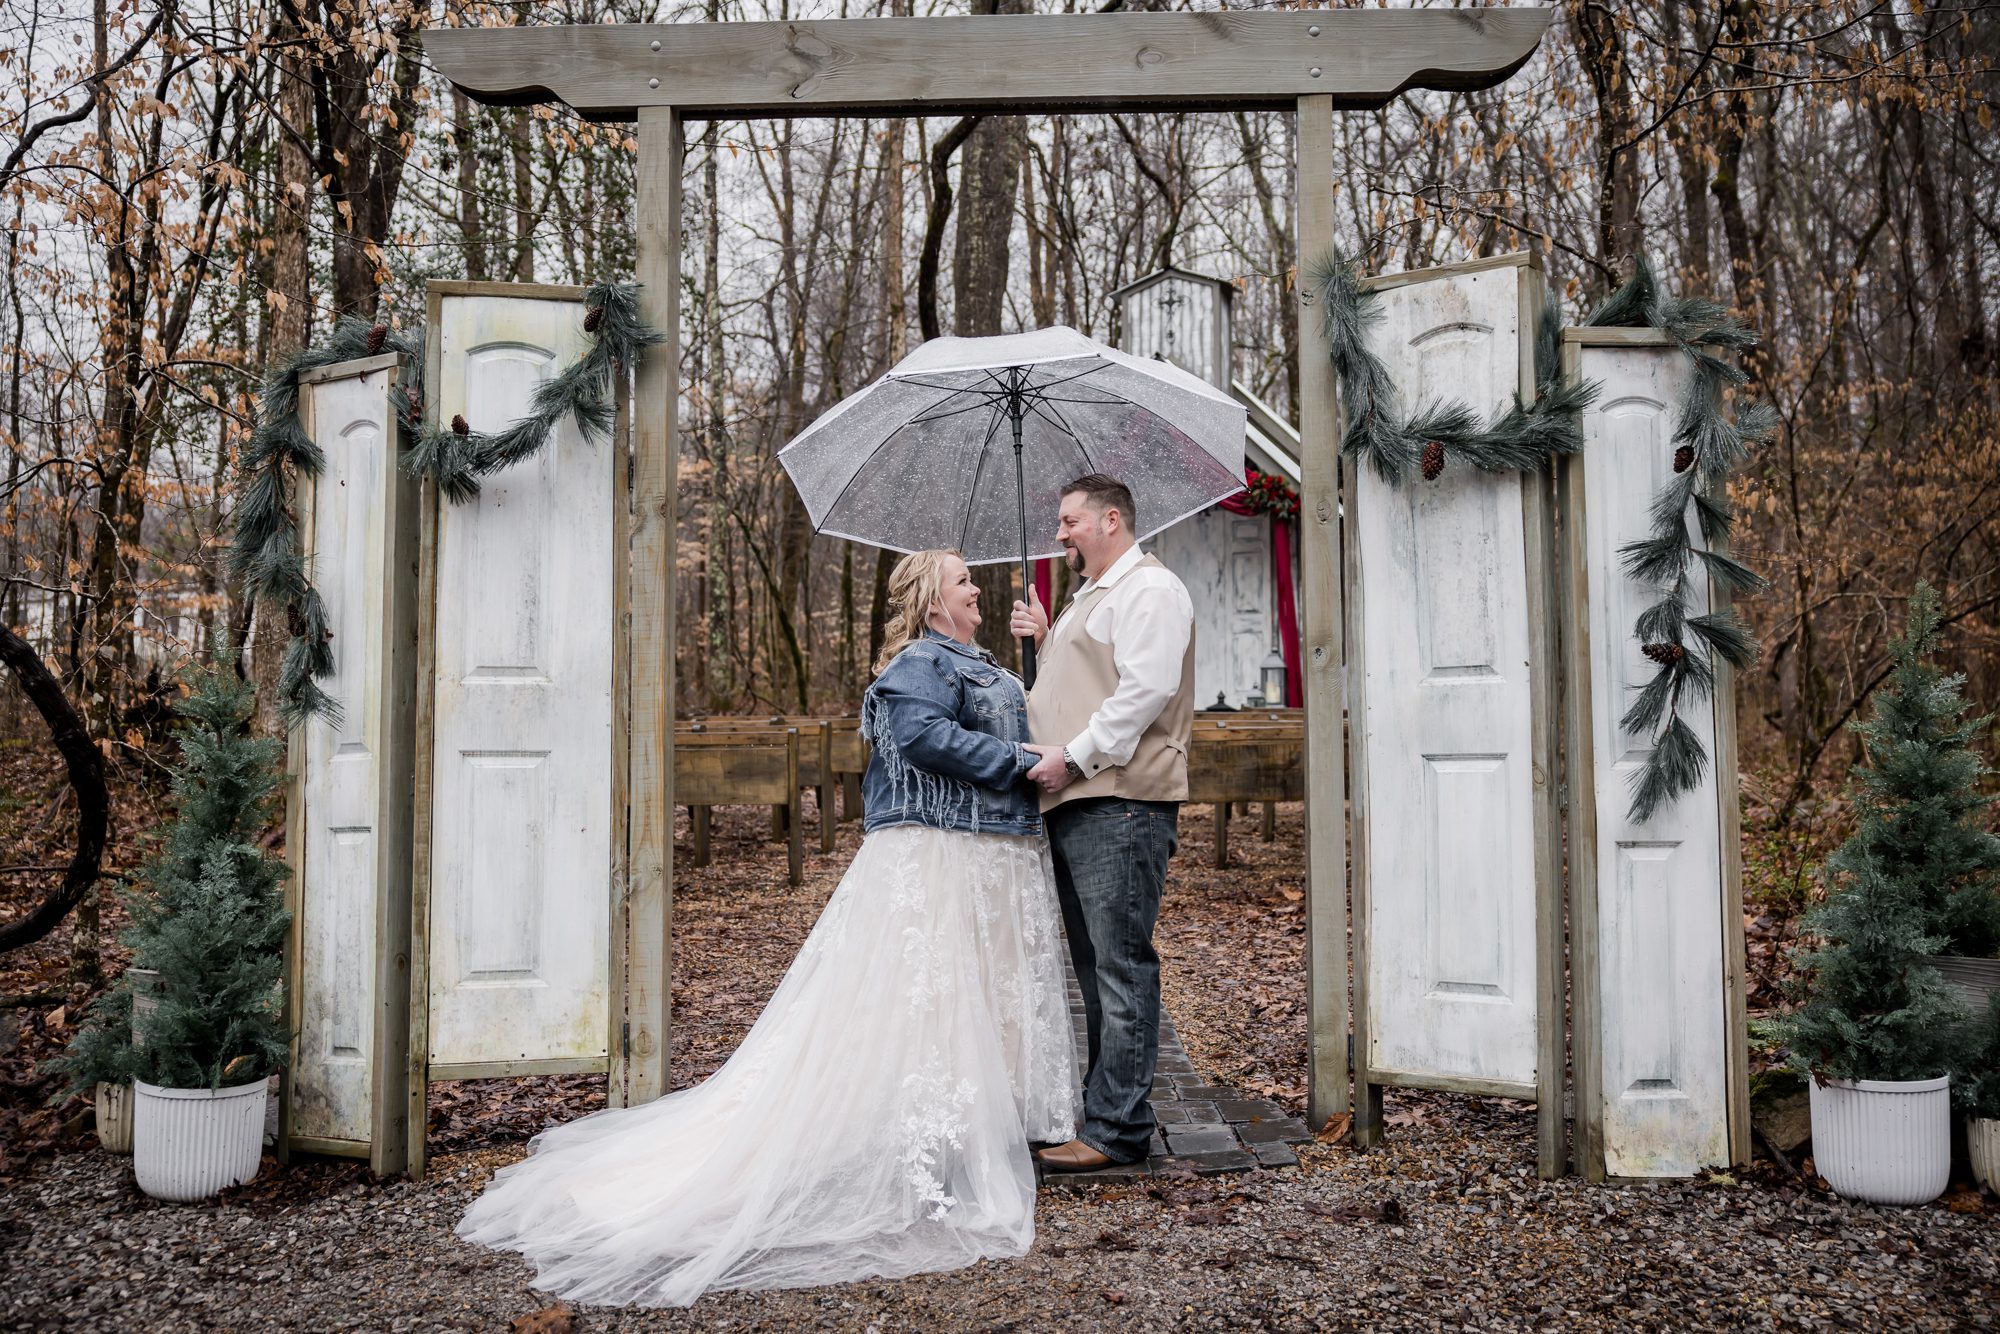 Umbrella Bride and Groom Portrait